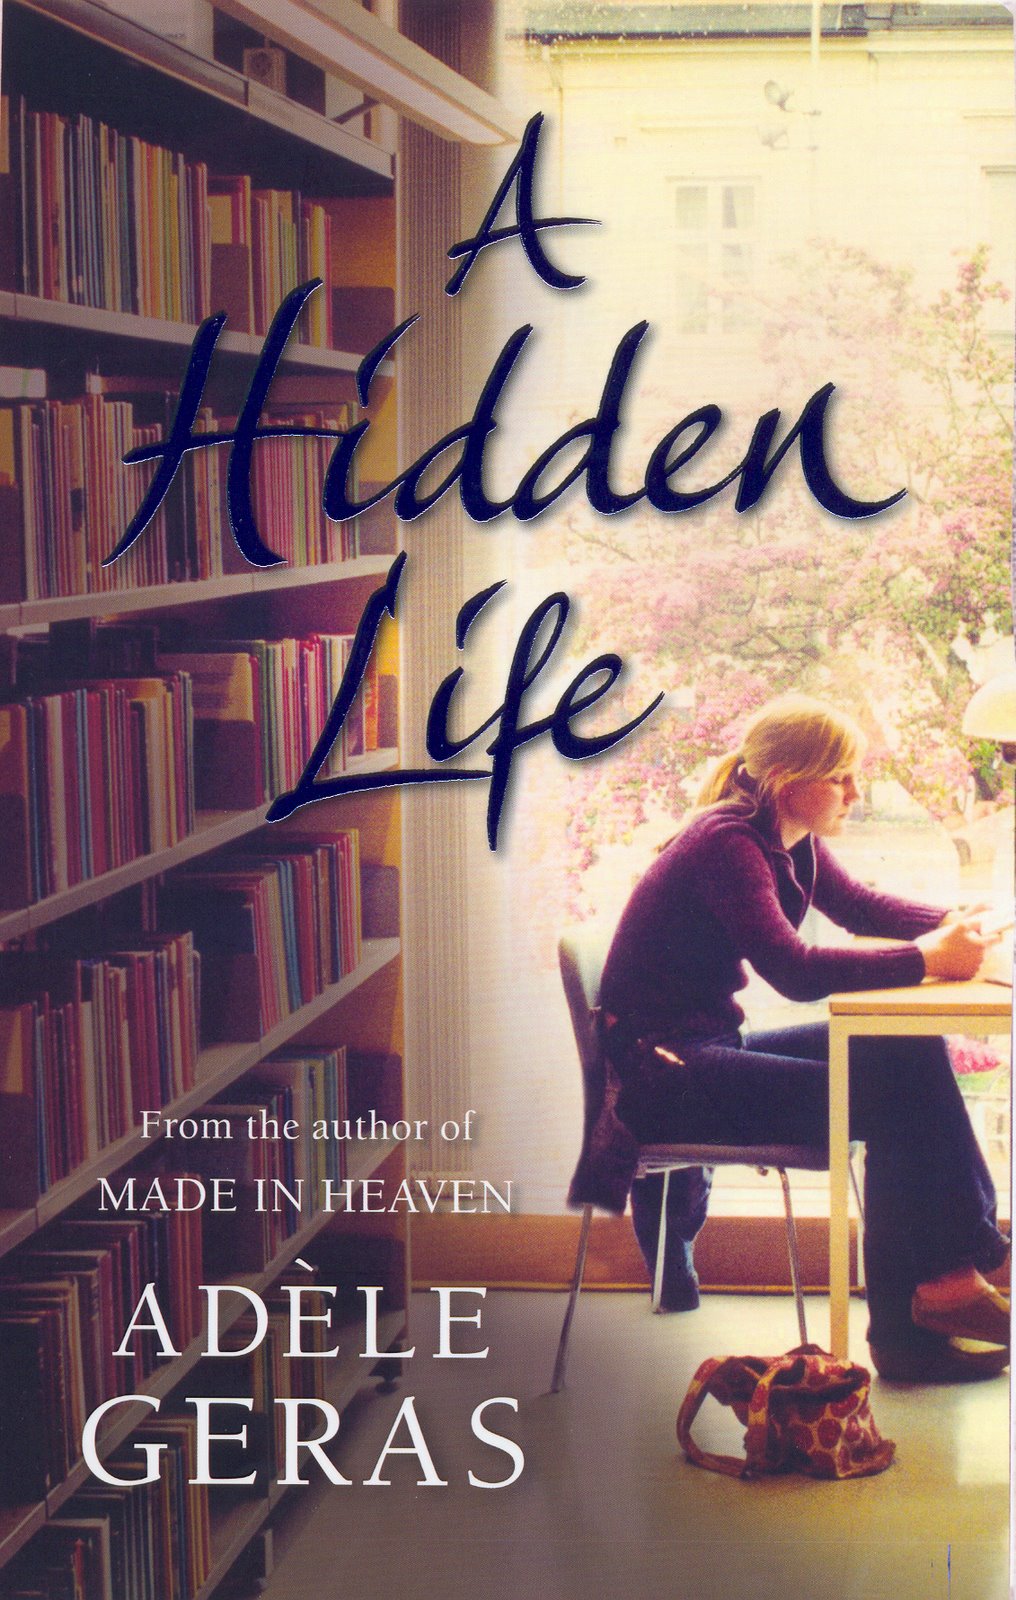 [Hidden+Life.jpg]